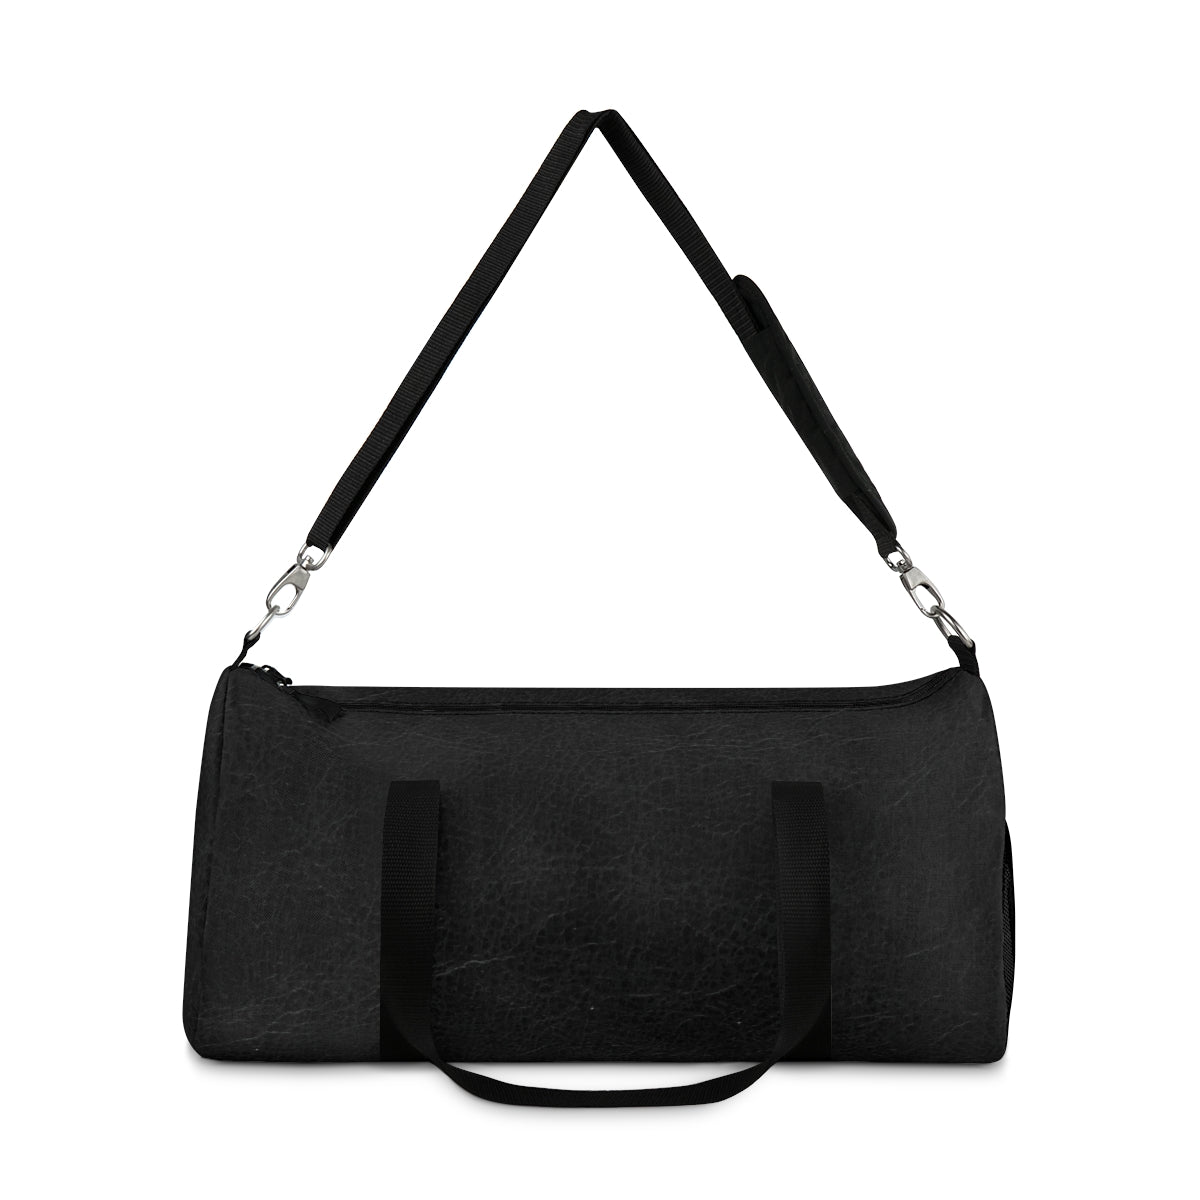 LEATHERTONE [Black] Duffel Bag | CANAANWEAR | Bags | All Over Print